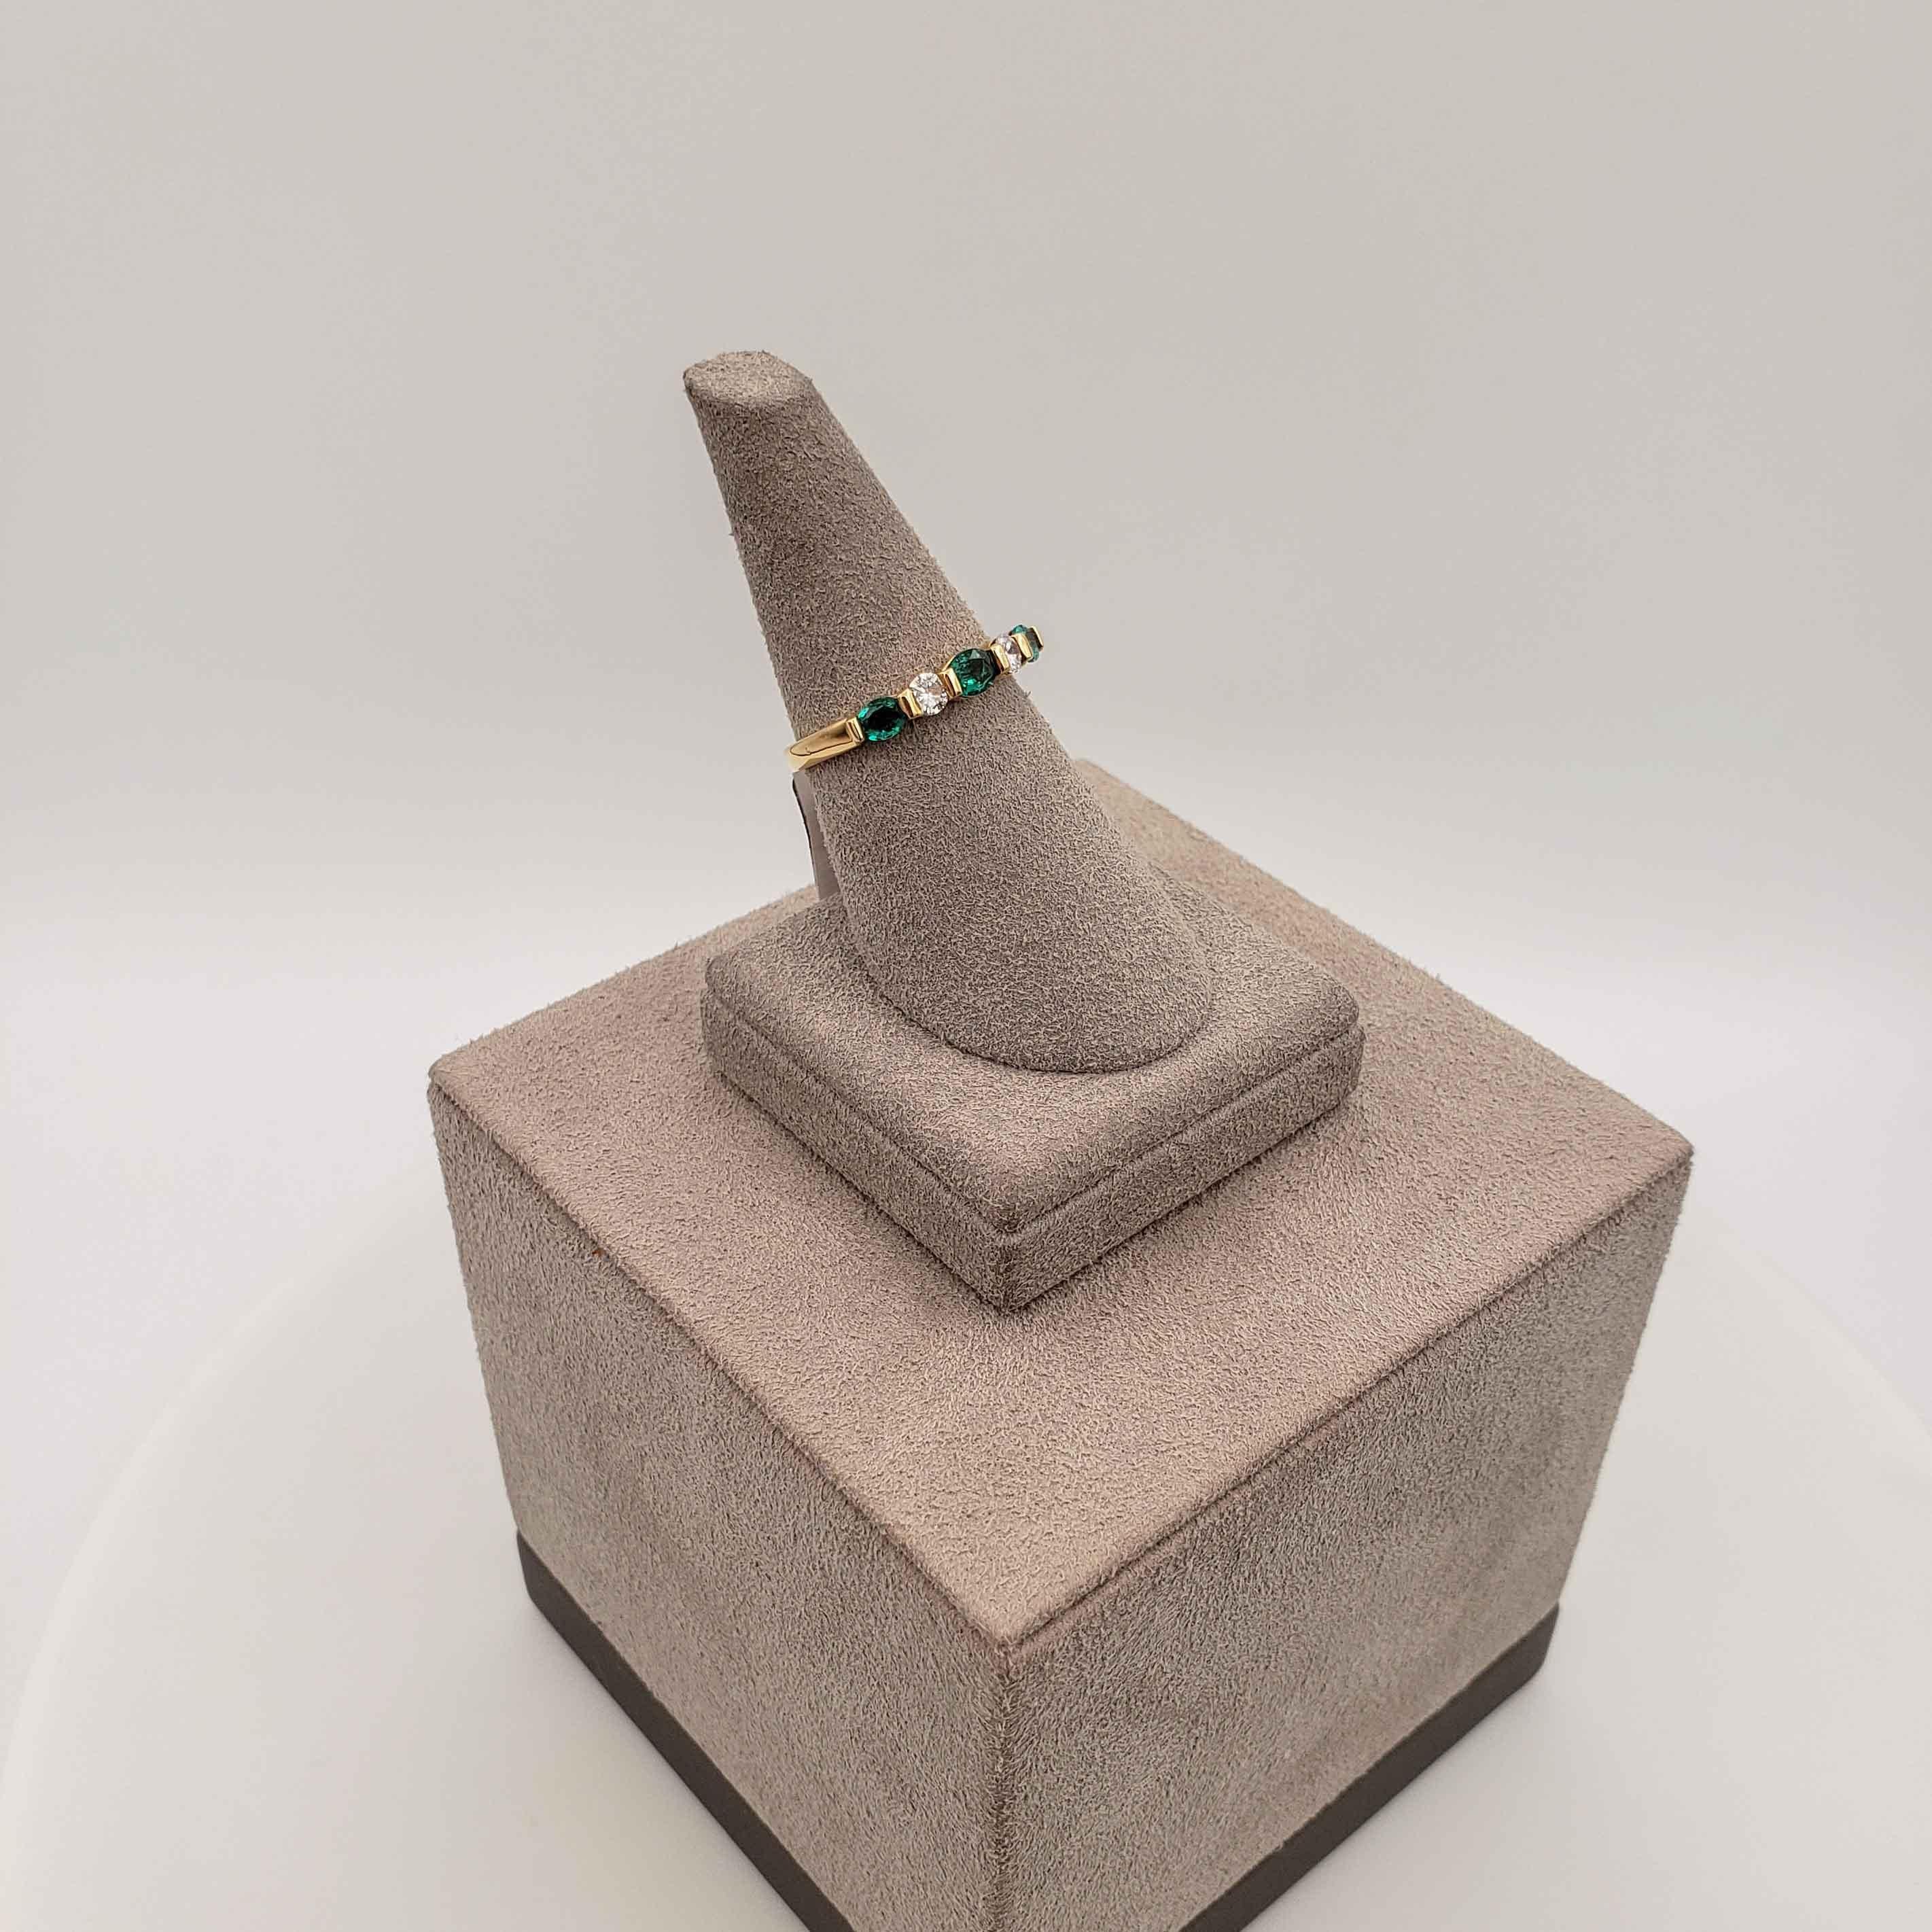 Women's Alternating Green Emerald and Diamond Five-Stone Ring